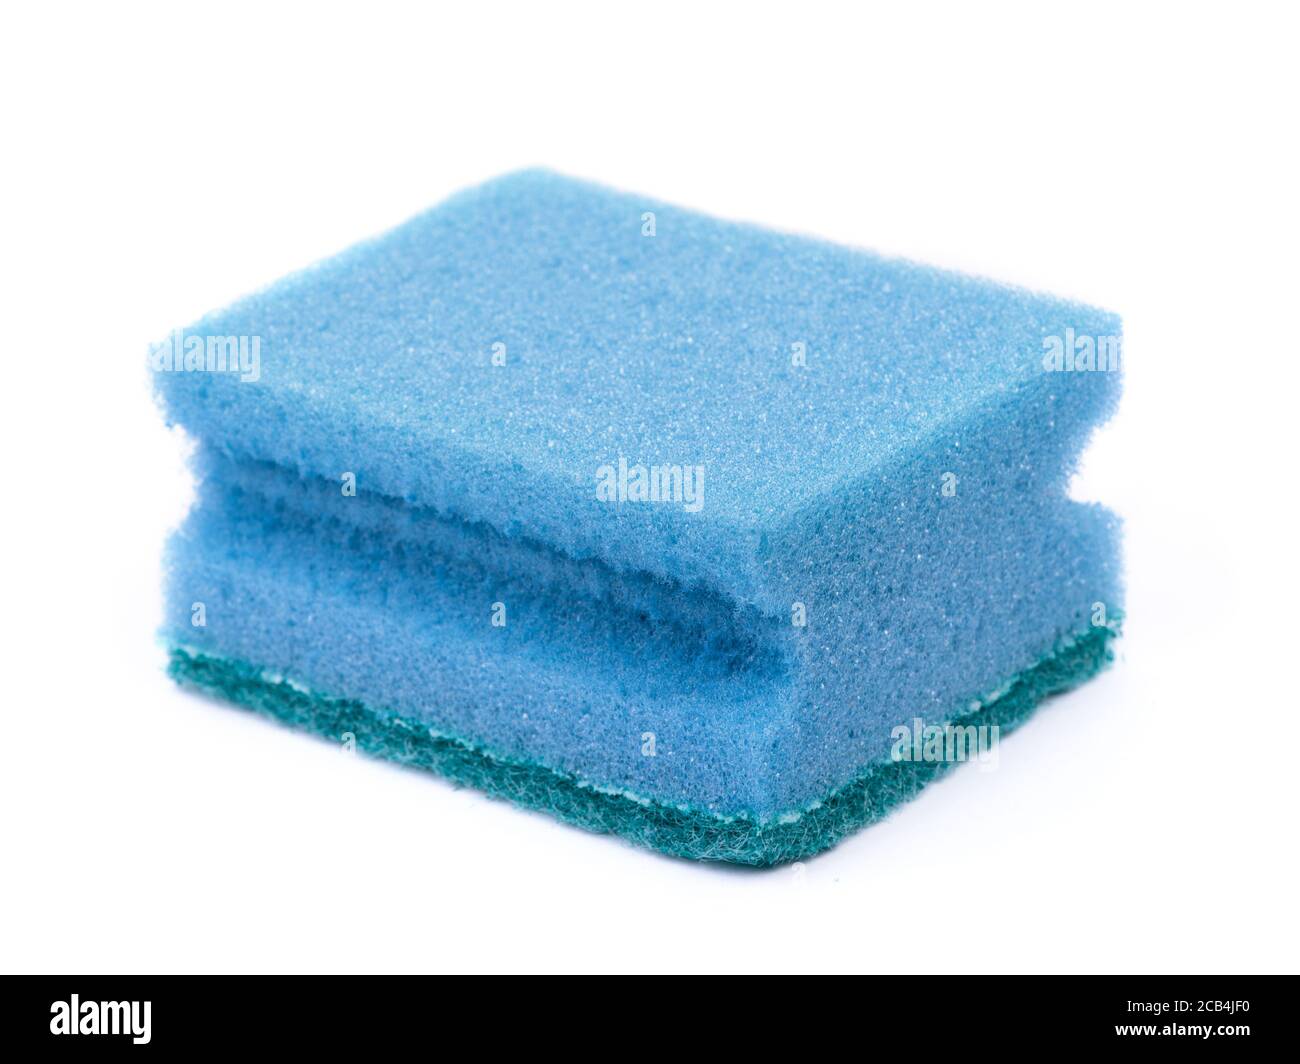 https://c8.alamy.com/compes/2cb4jf0/una-nueva-esponja-limpia-de-lavavajillas-aislada-sobre-fondo-blanco-2cb4jf0.jpg